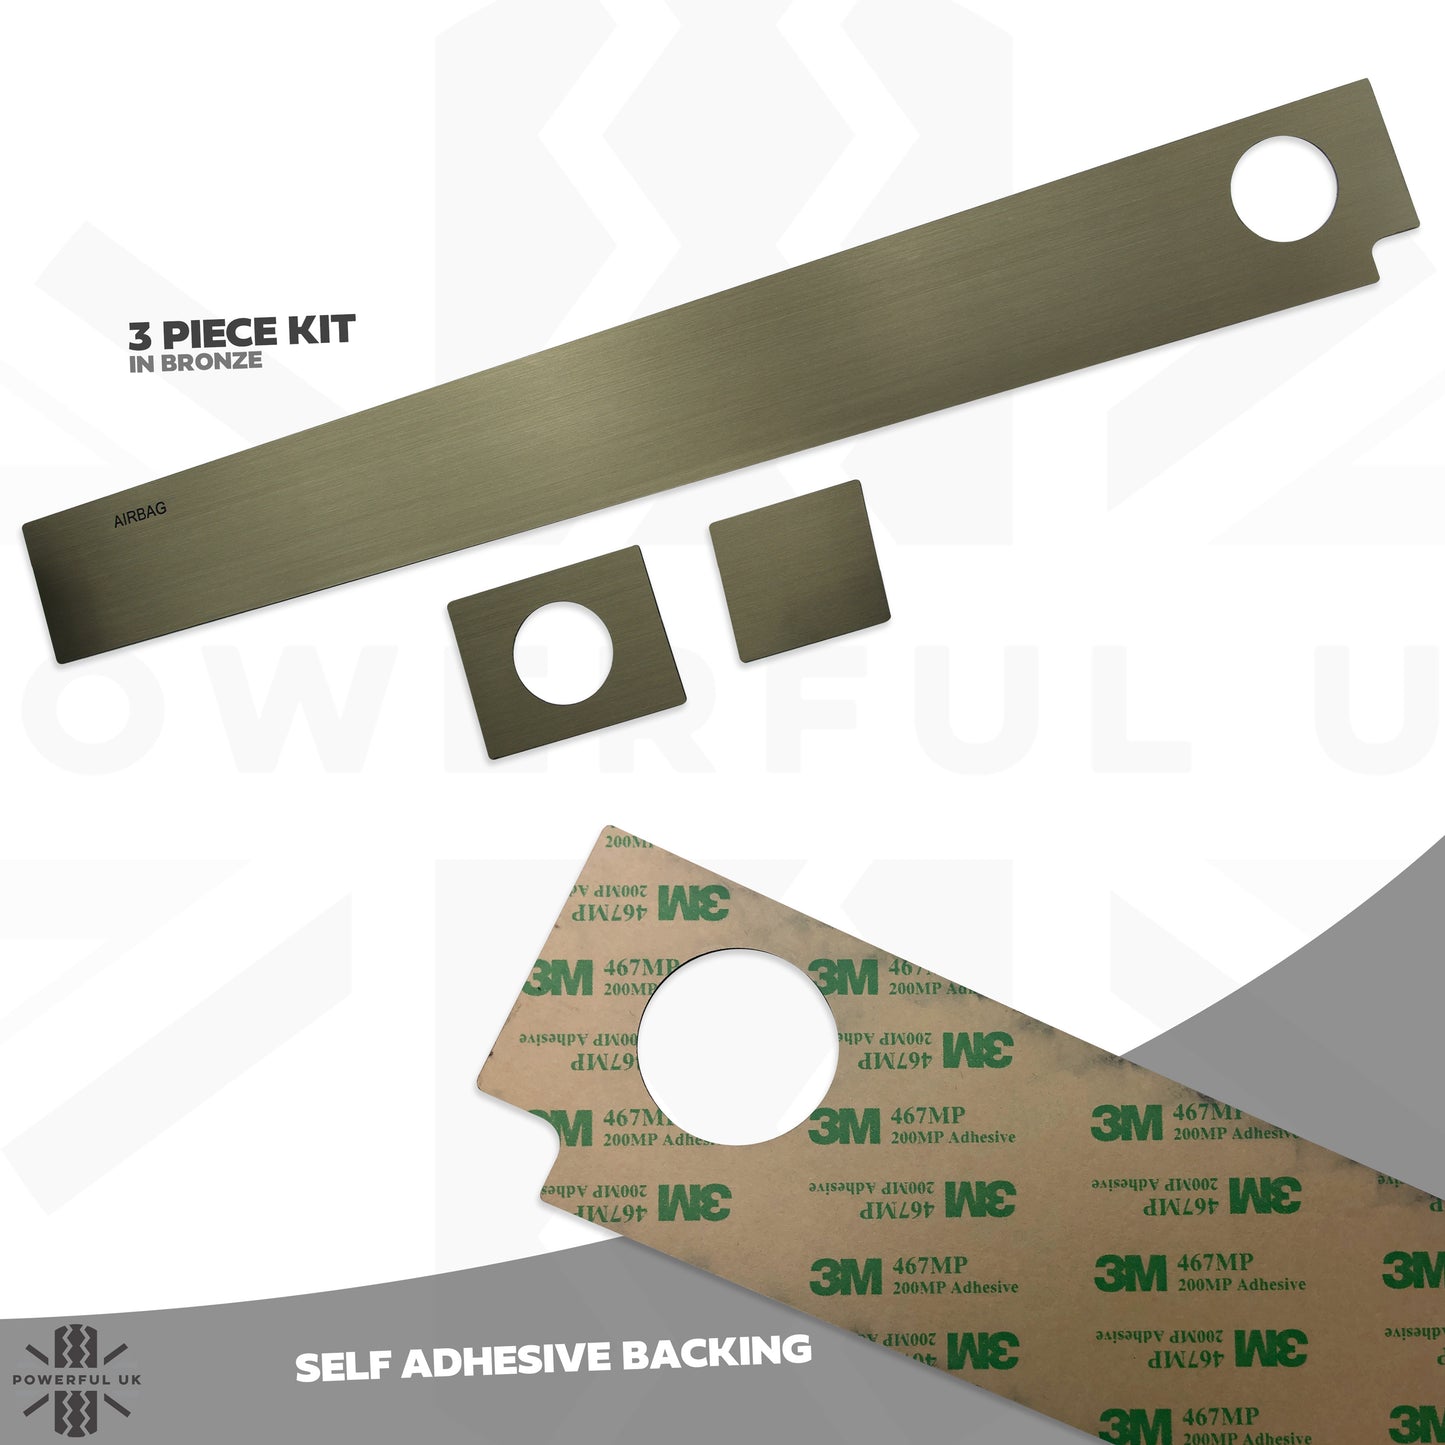 Dash Insert Upgrade Kit for Range Rover L405 (RHD) - Bronze